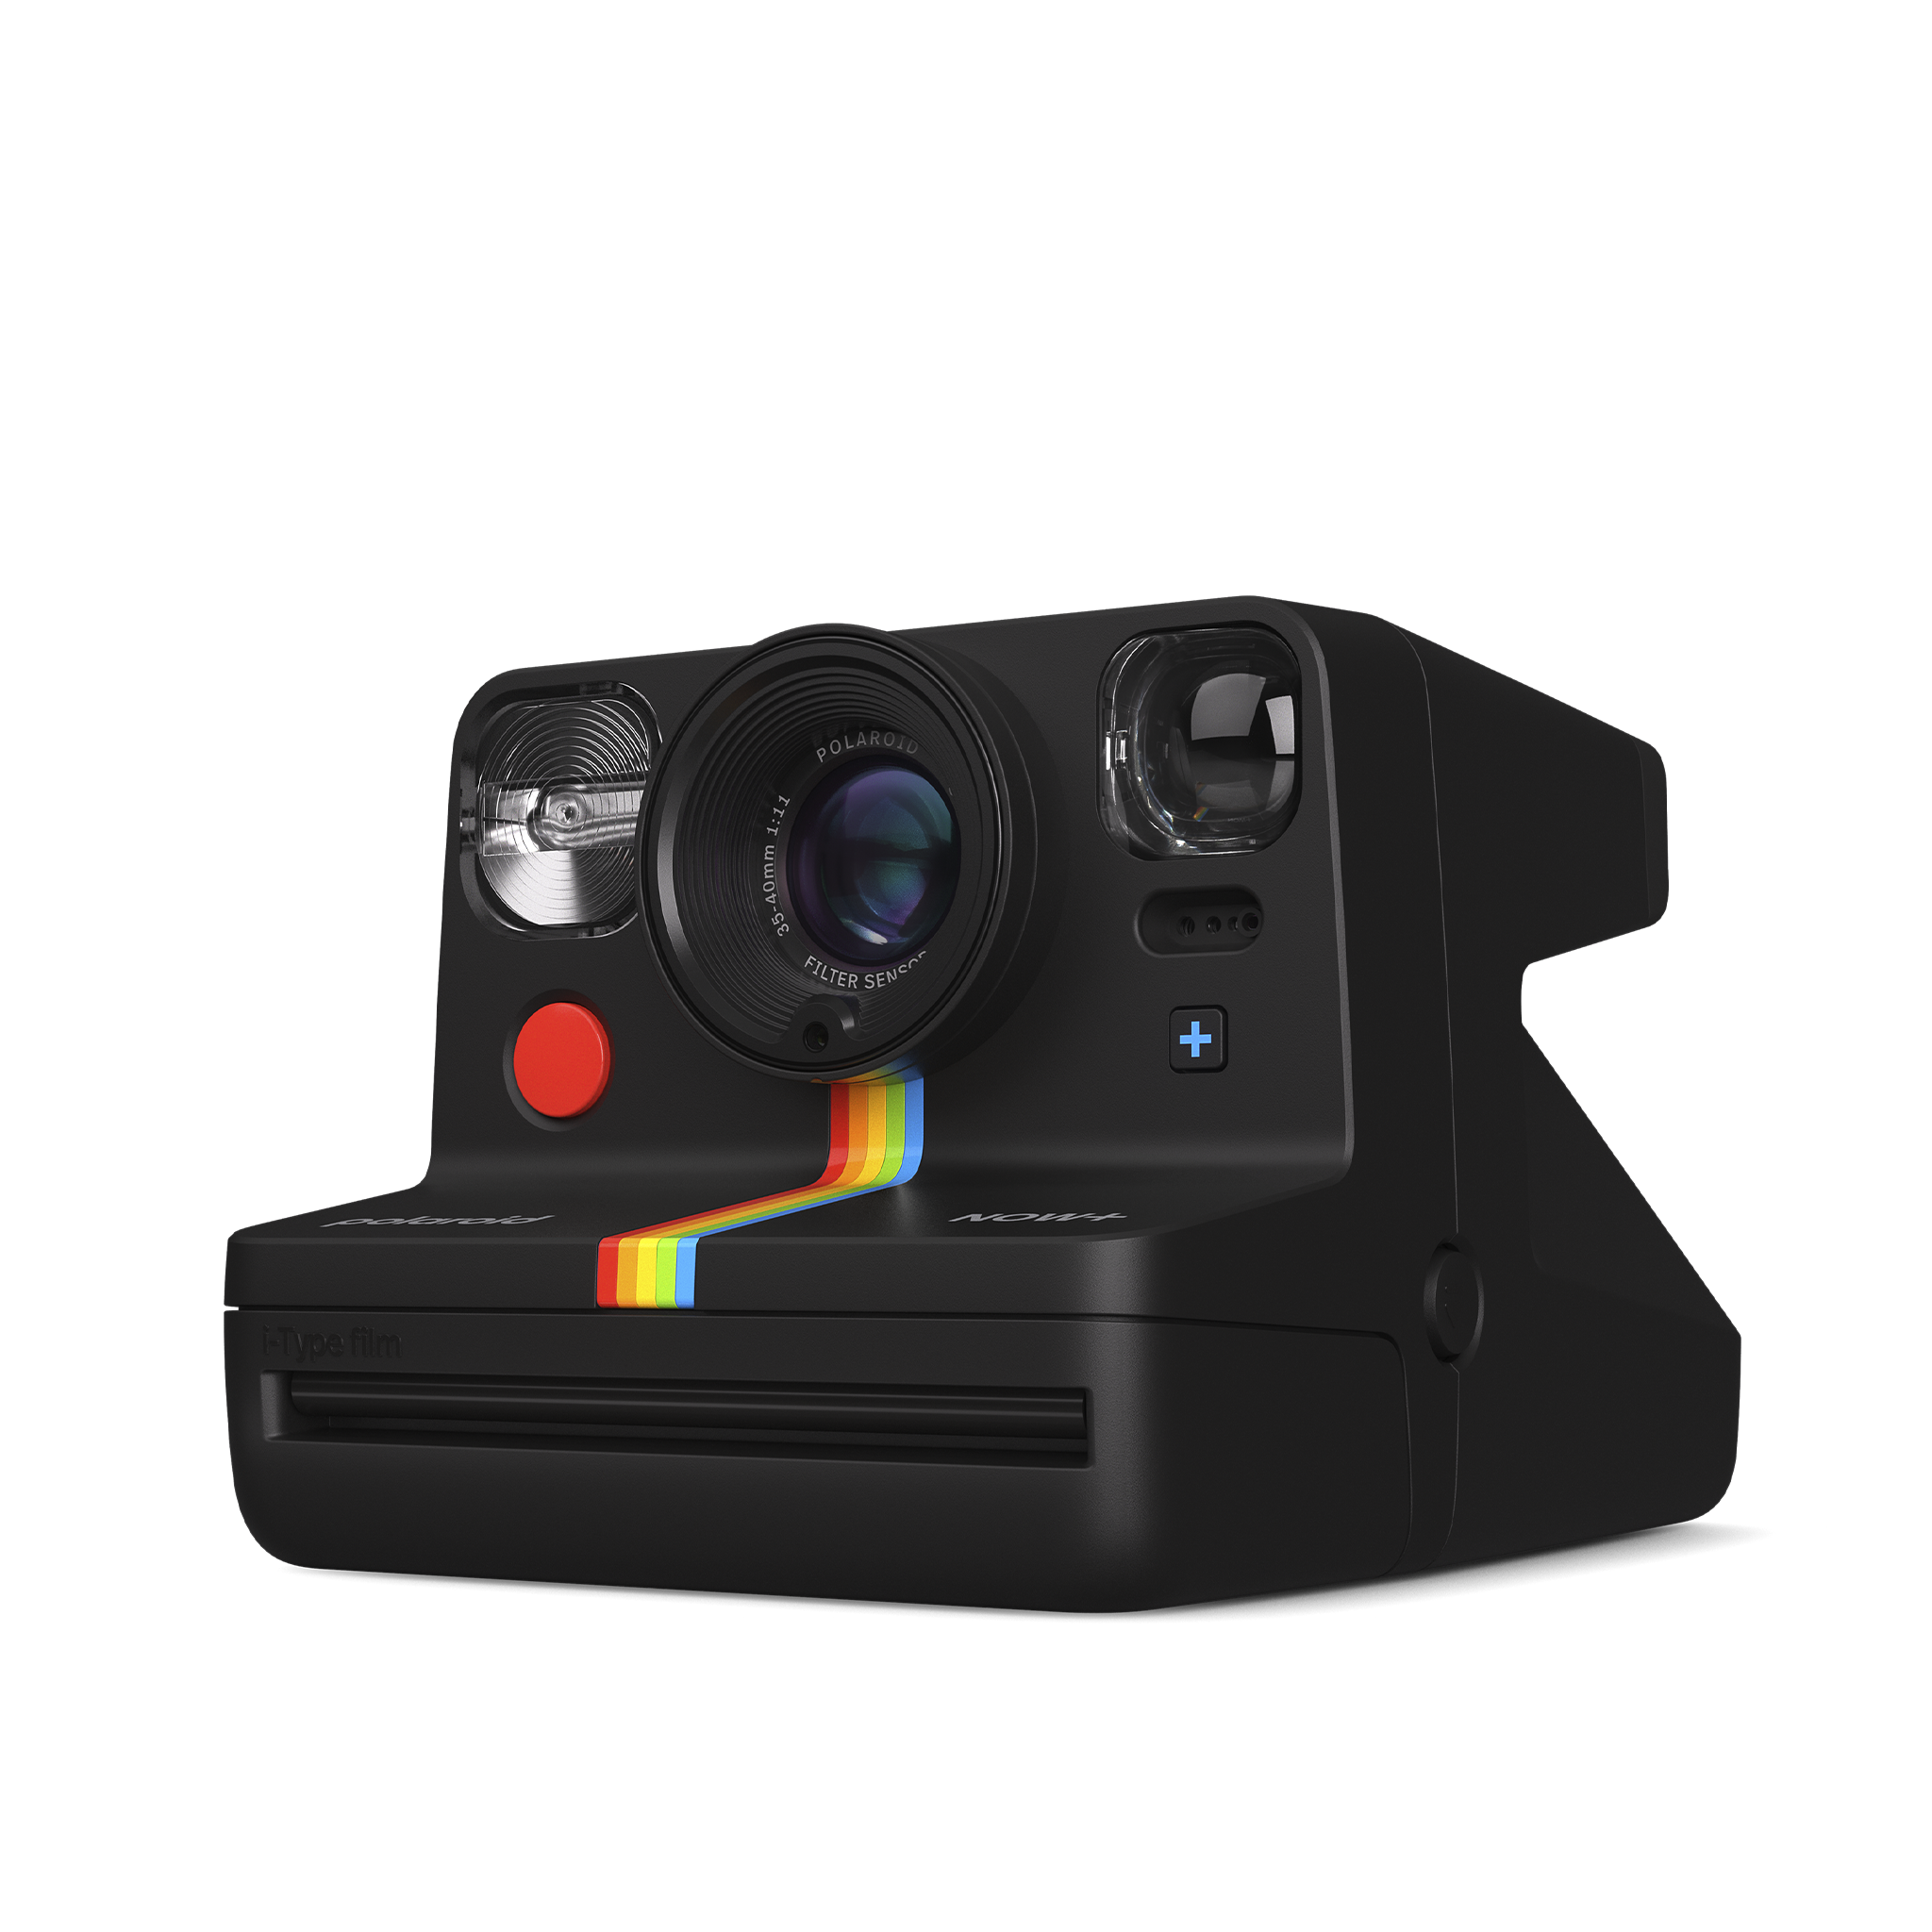 Polaroid Now+ Generation 2 i-Type Instant Camera + 5 lens filters